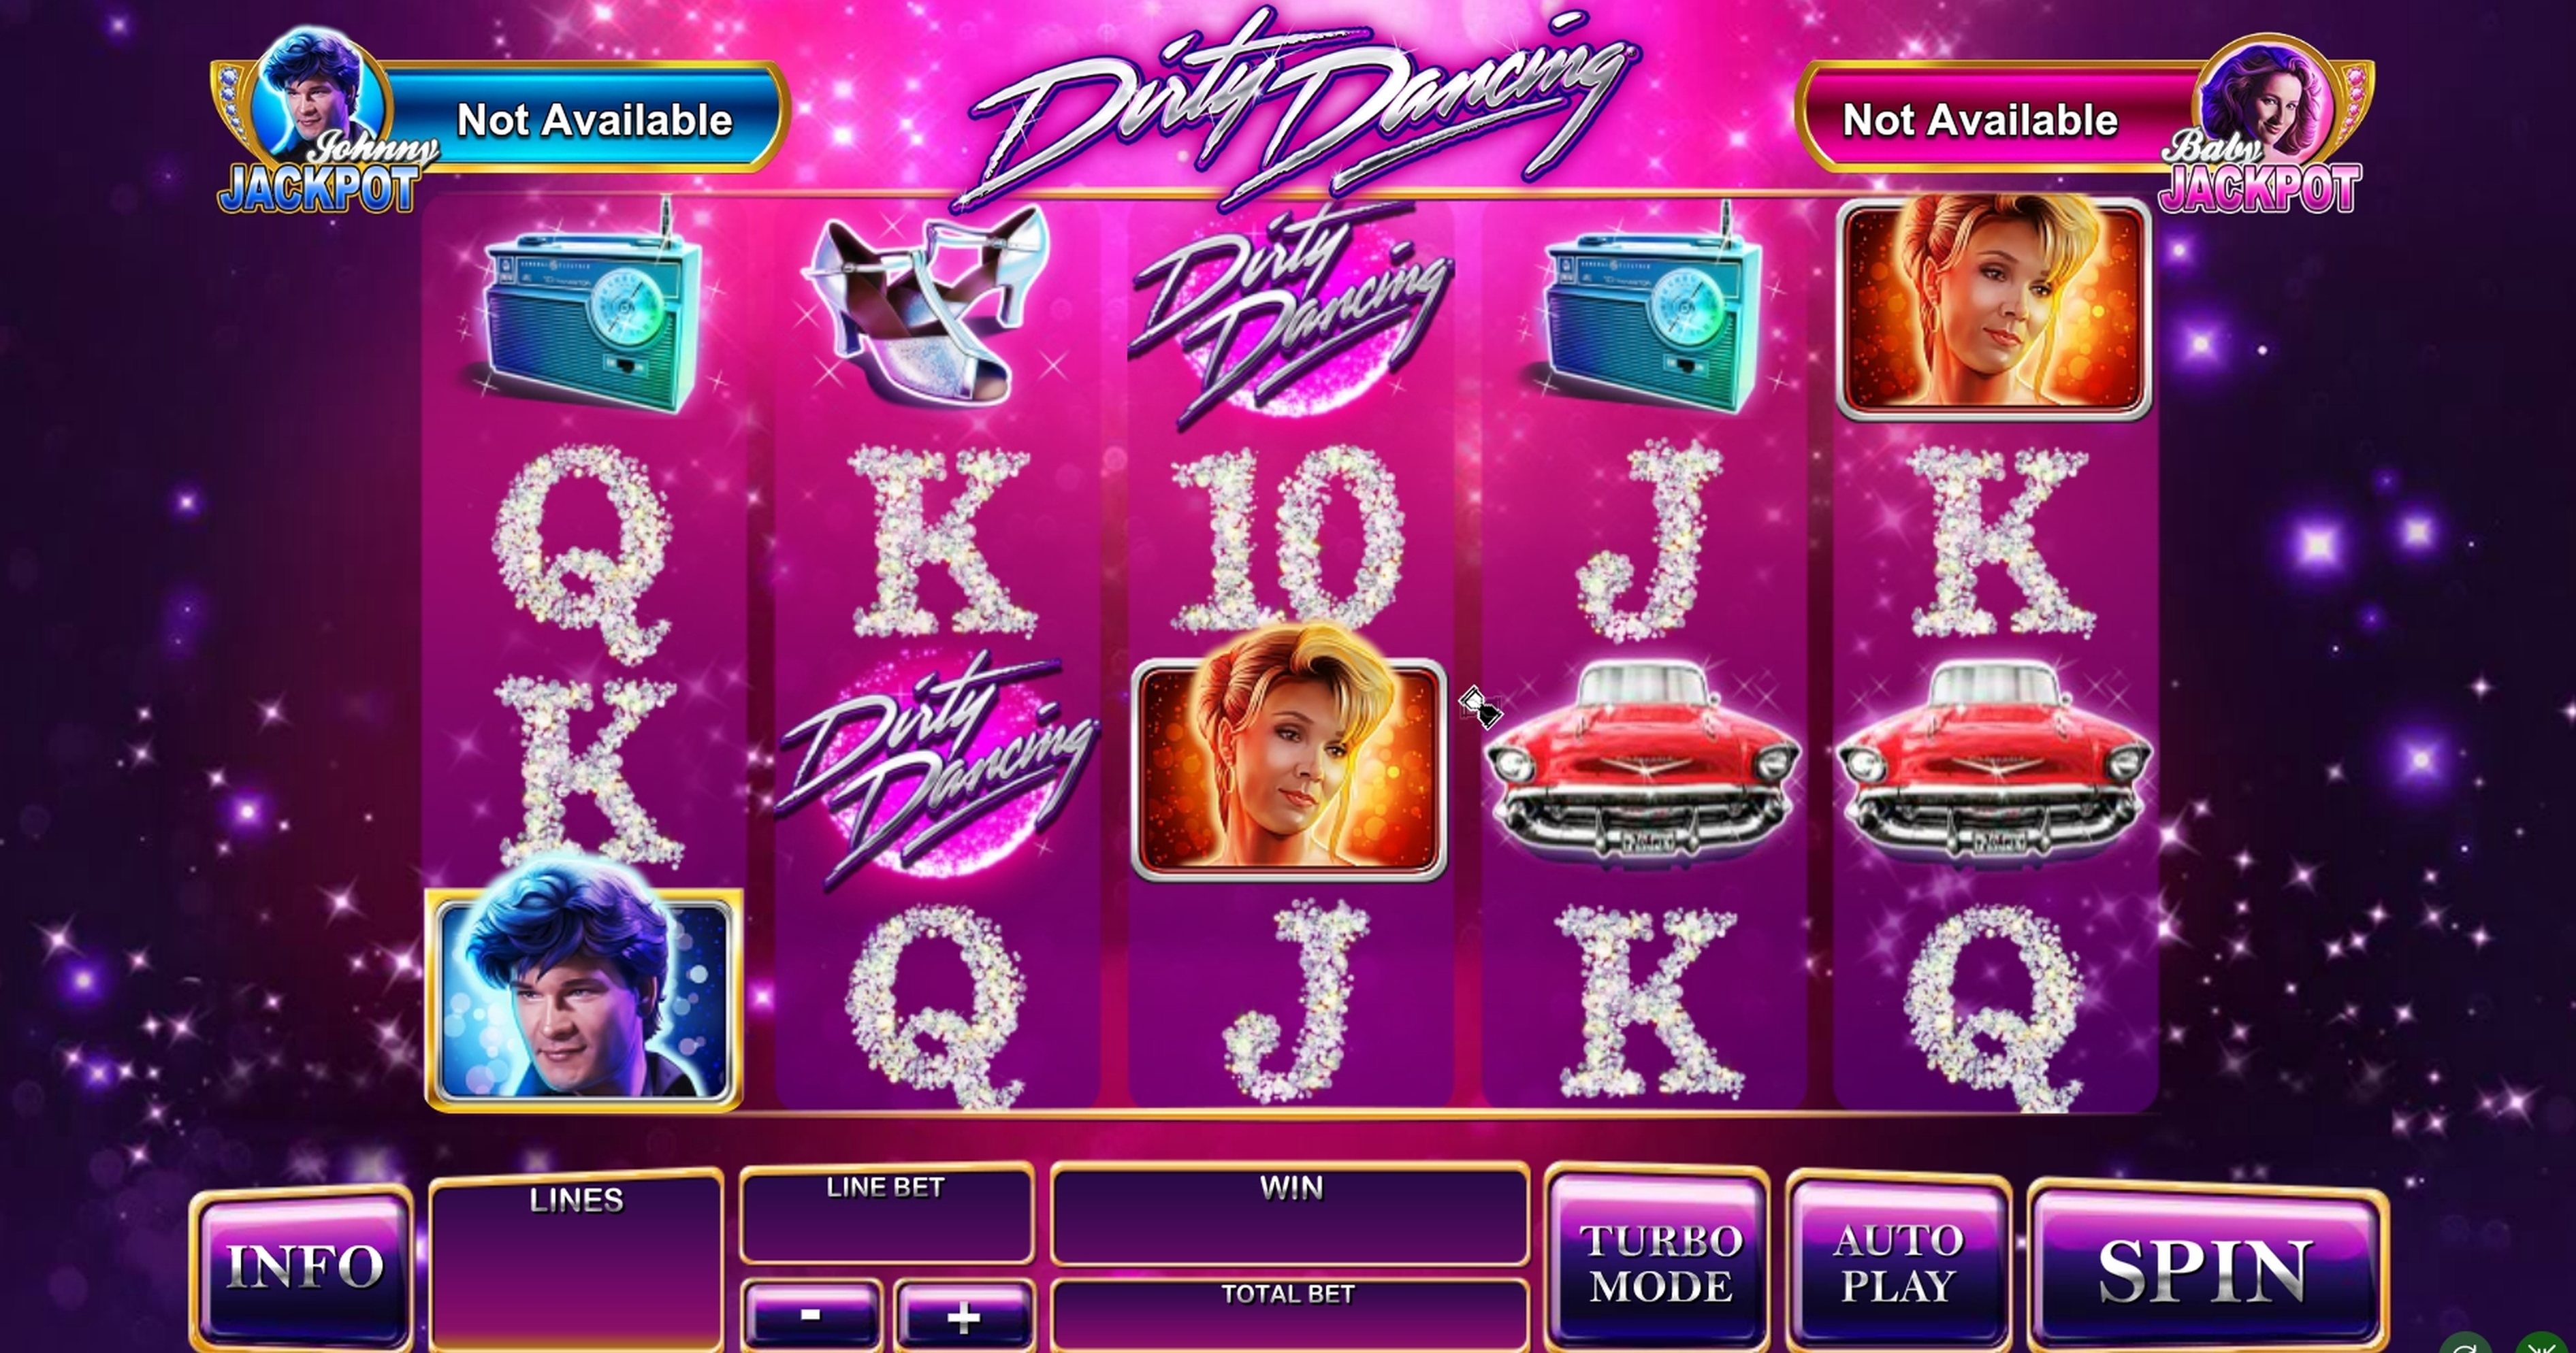 Reels in Dirty Dancing Slot Game by Playtech